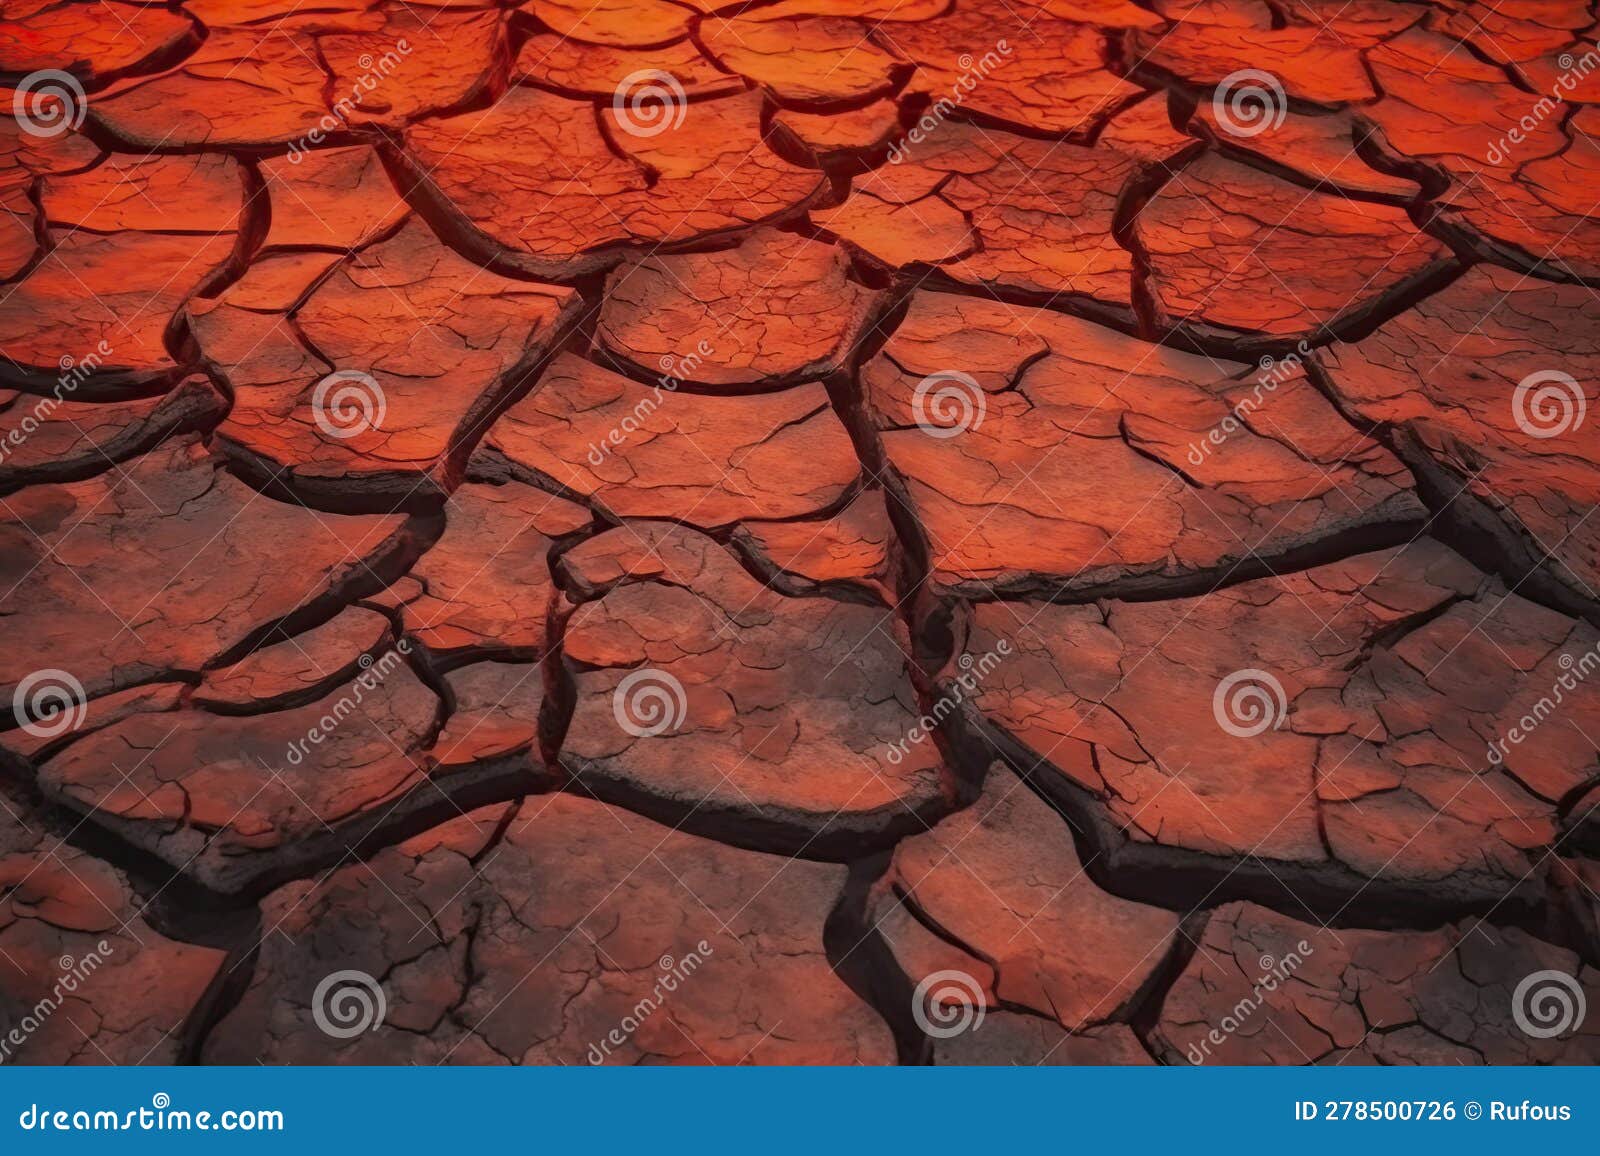 Heat red cracked ground texture burning after volcano eruption